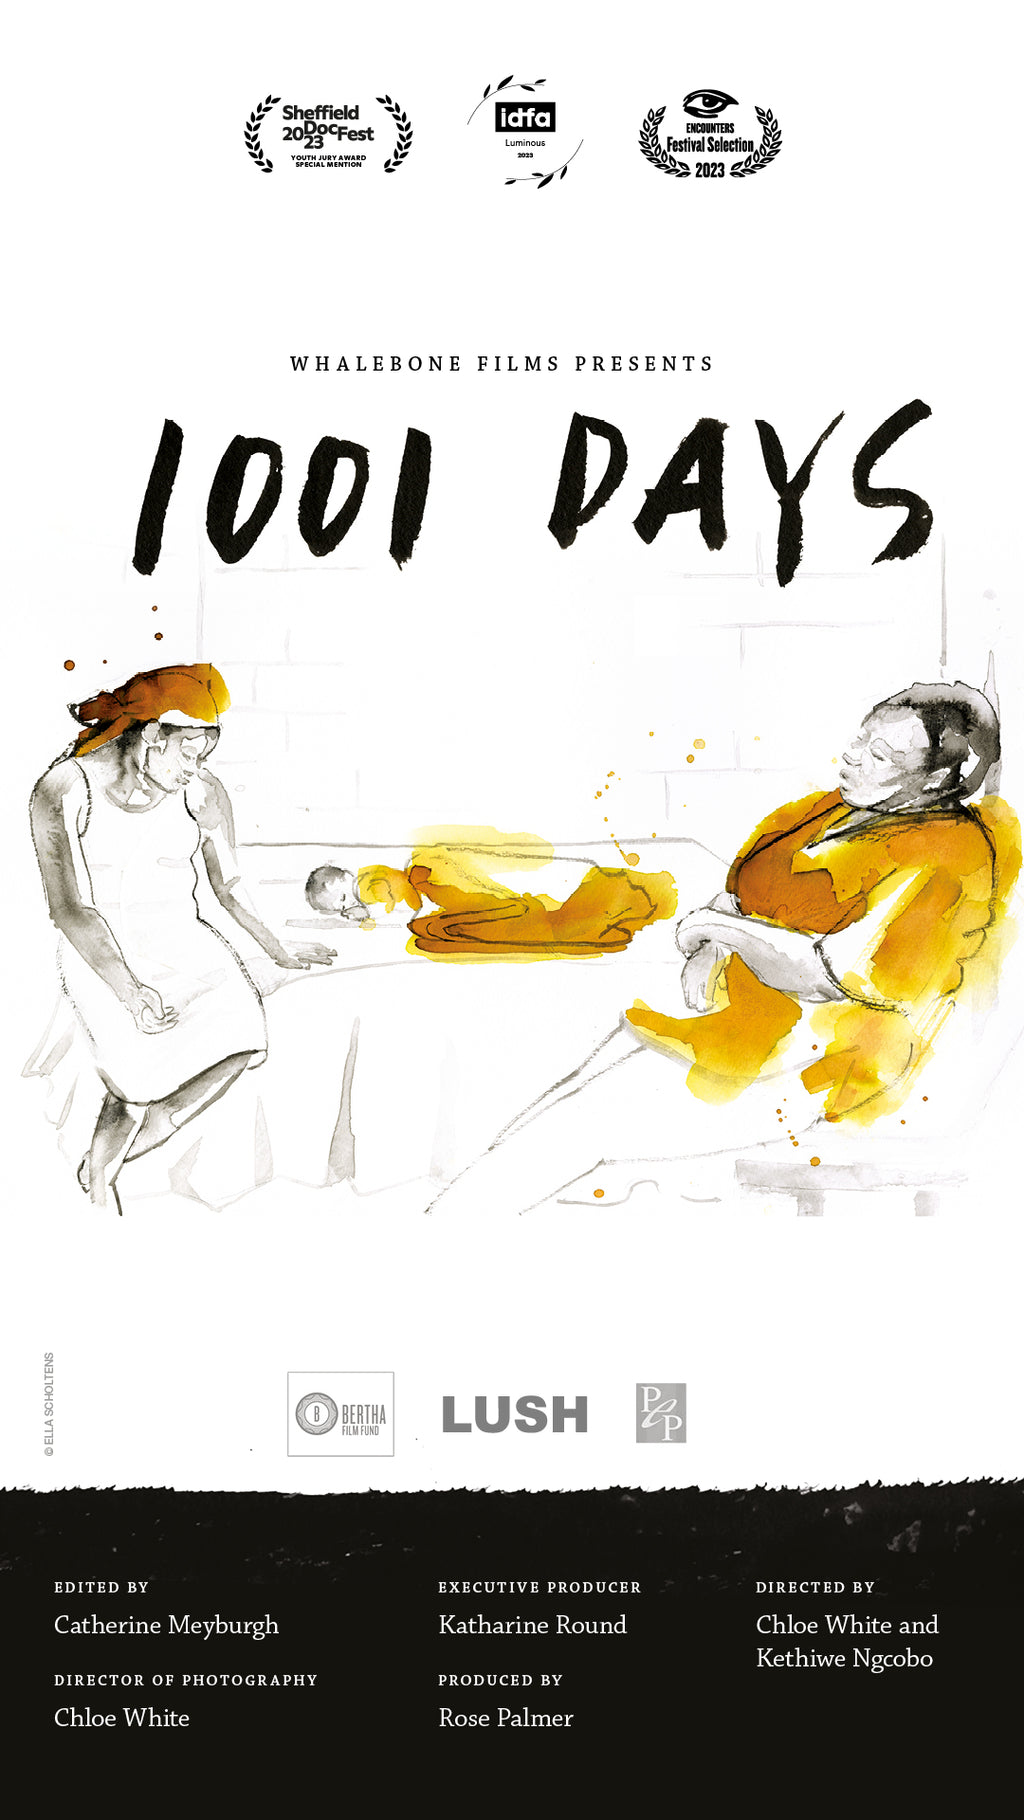 1001 Days